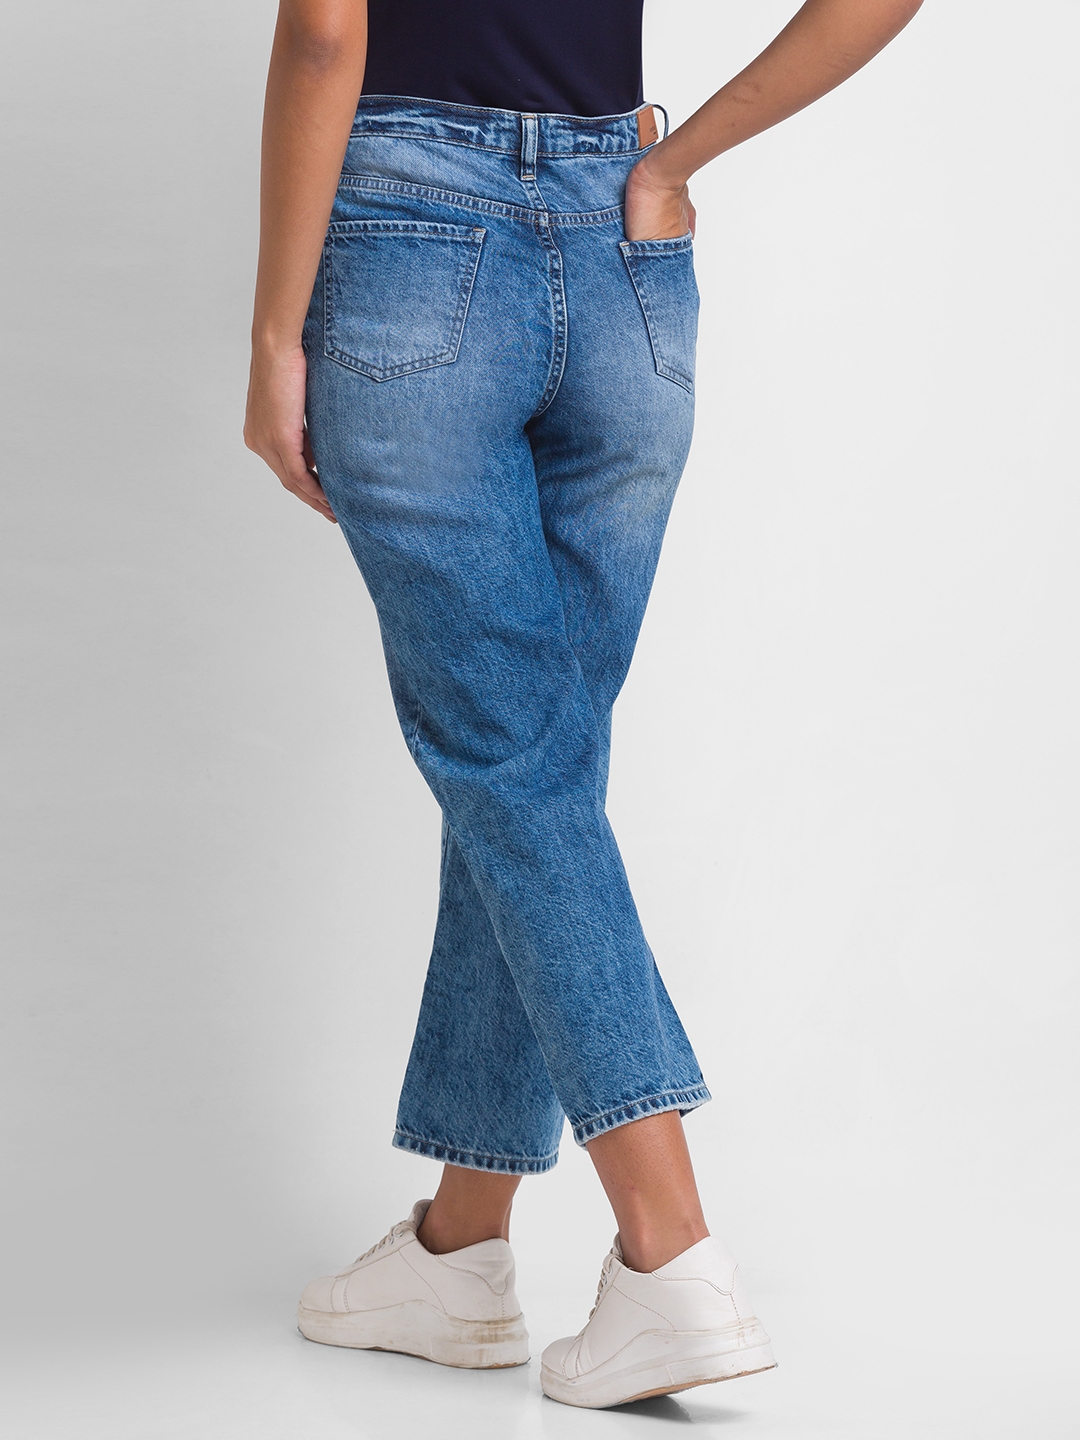 spykar | Women's Blue Cotton Solid Straight Jeans 2